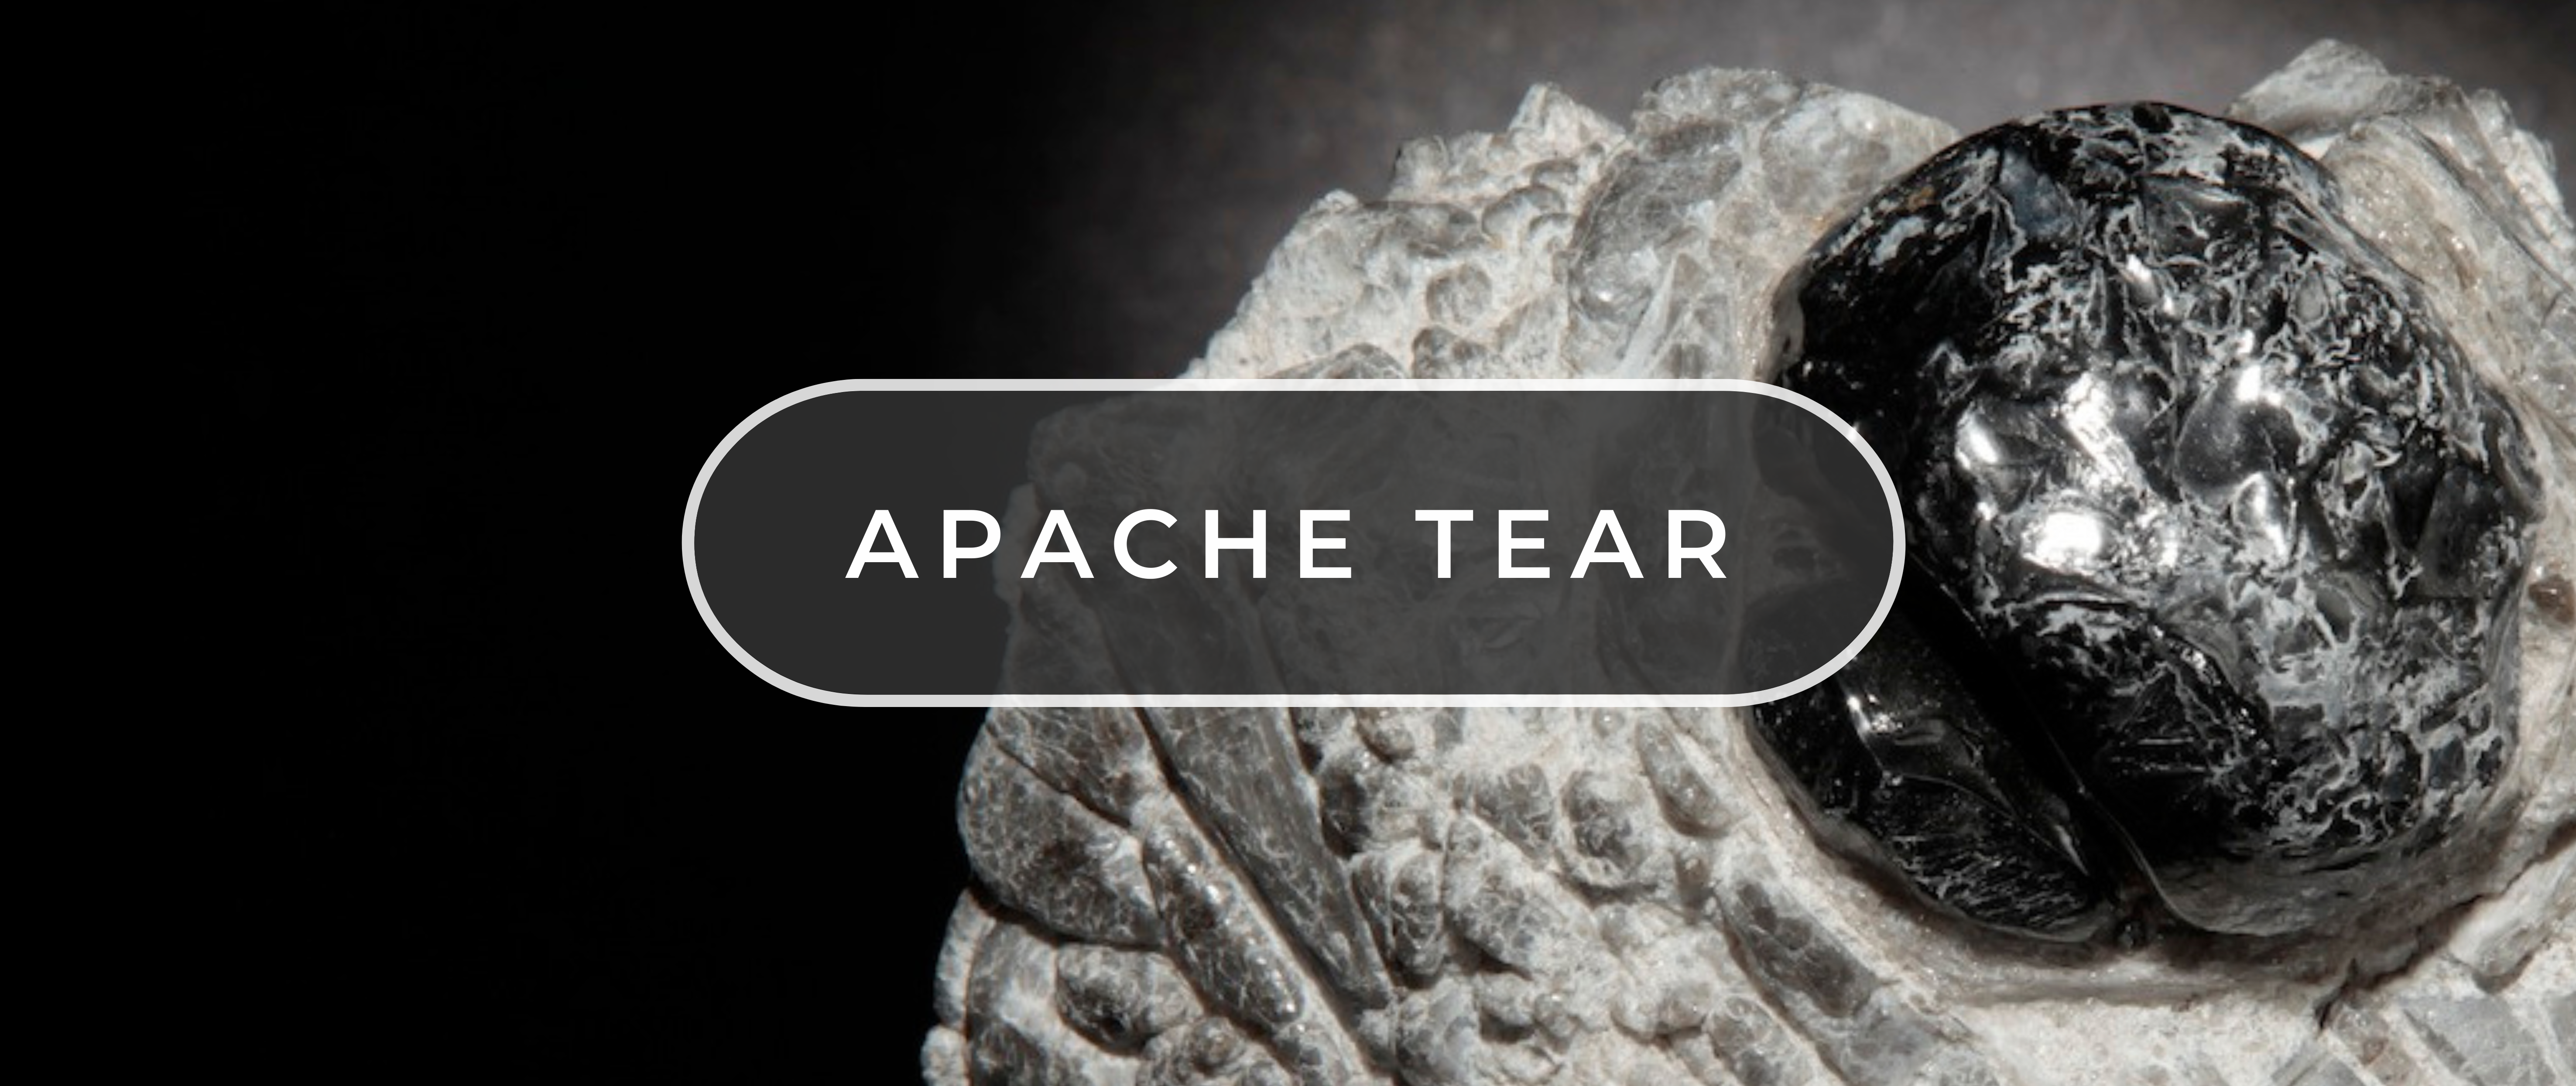 Apache Tears, Metaphysical Healing Properties